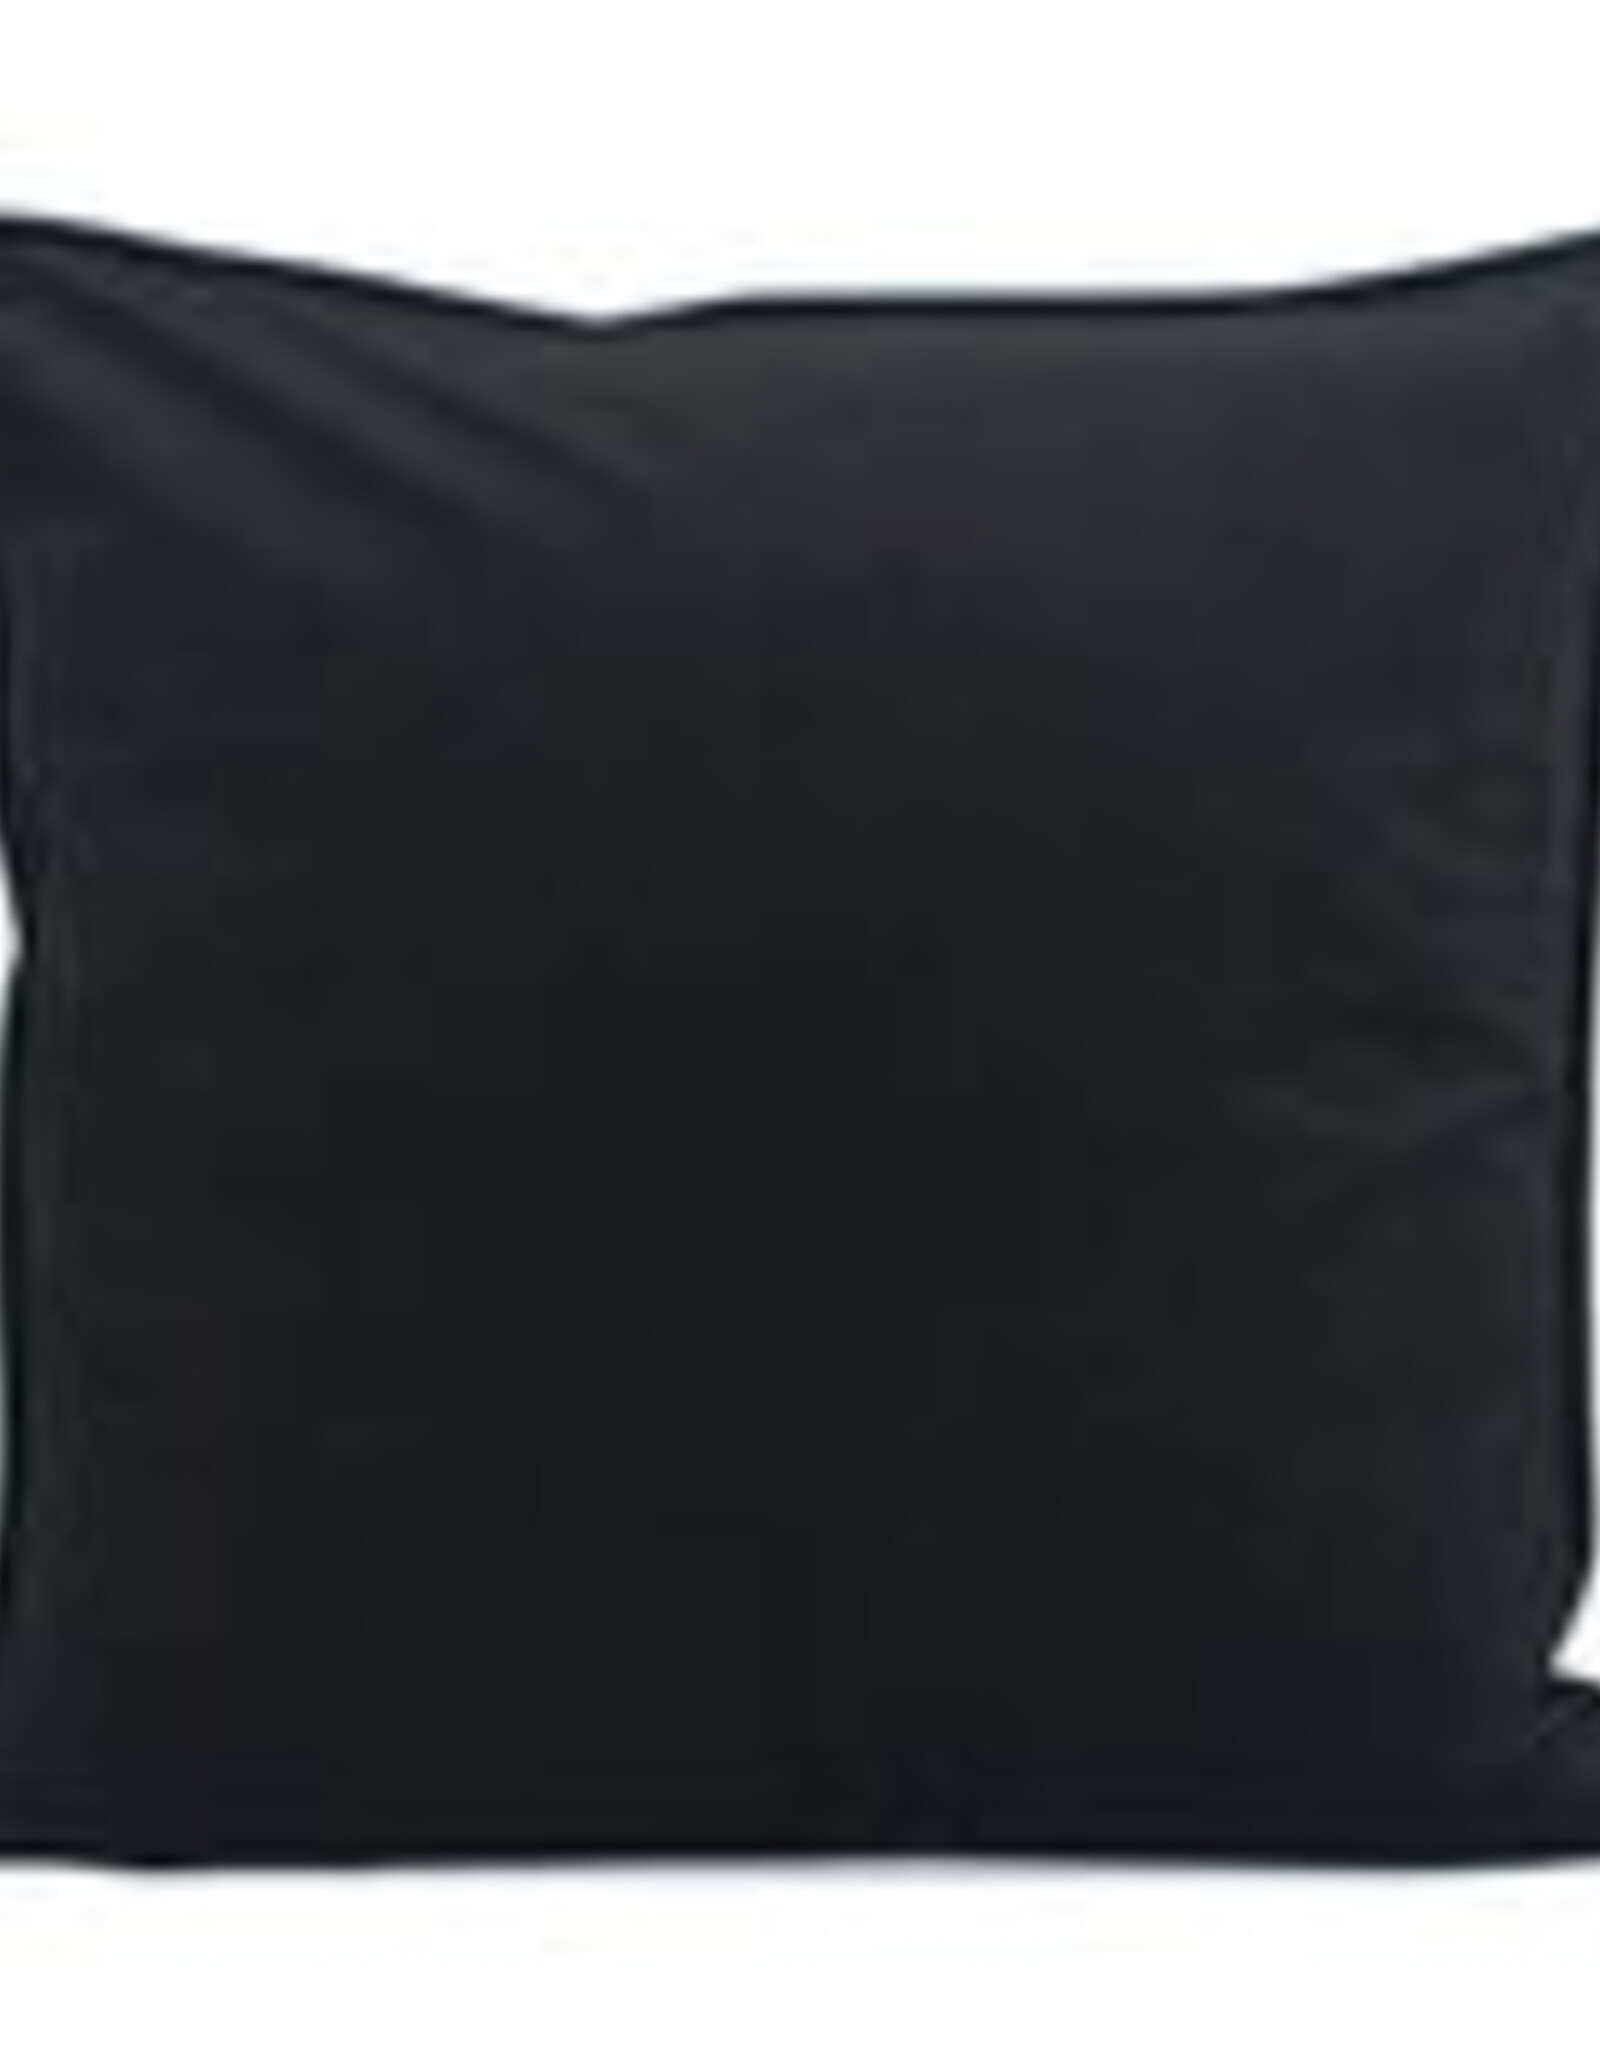 Daniadown Cushions Daniadown Dutch Velvet Black Deco 14 x 22